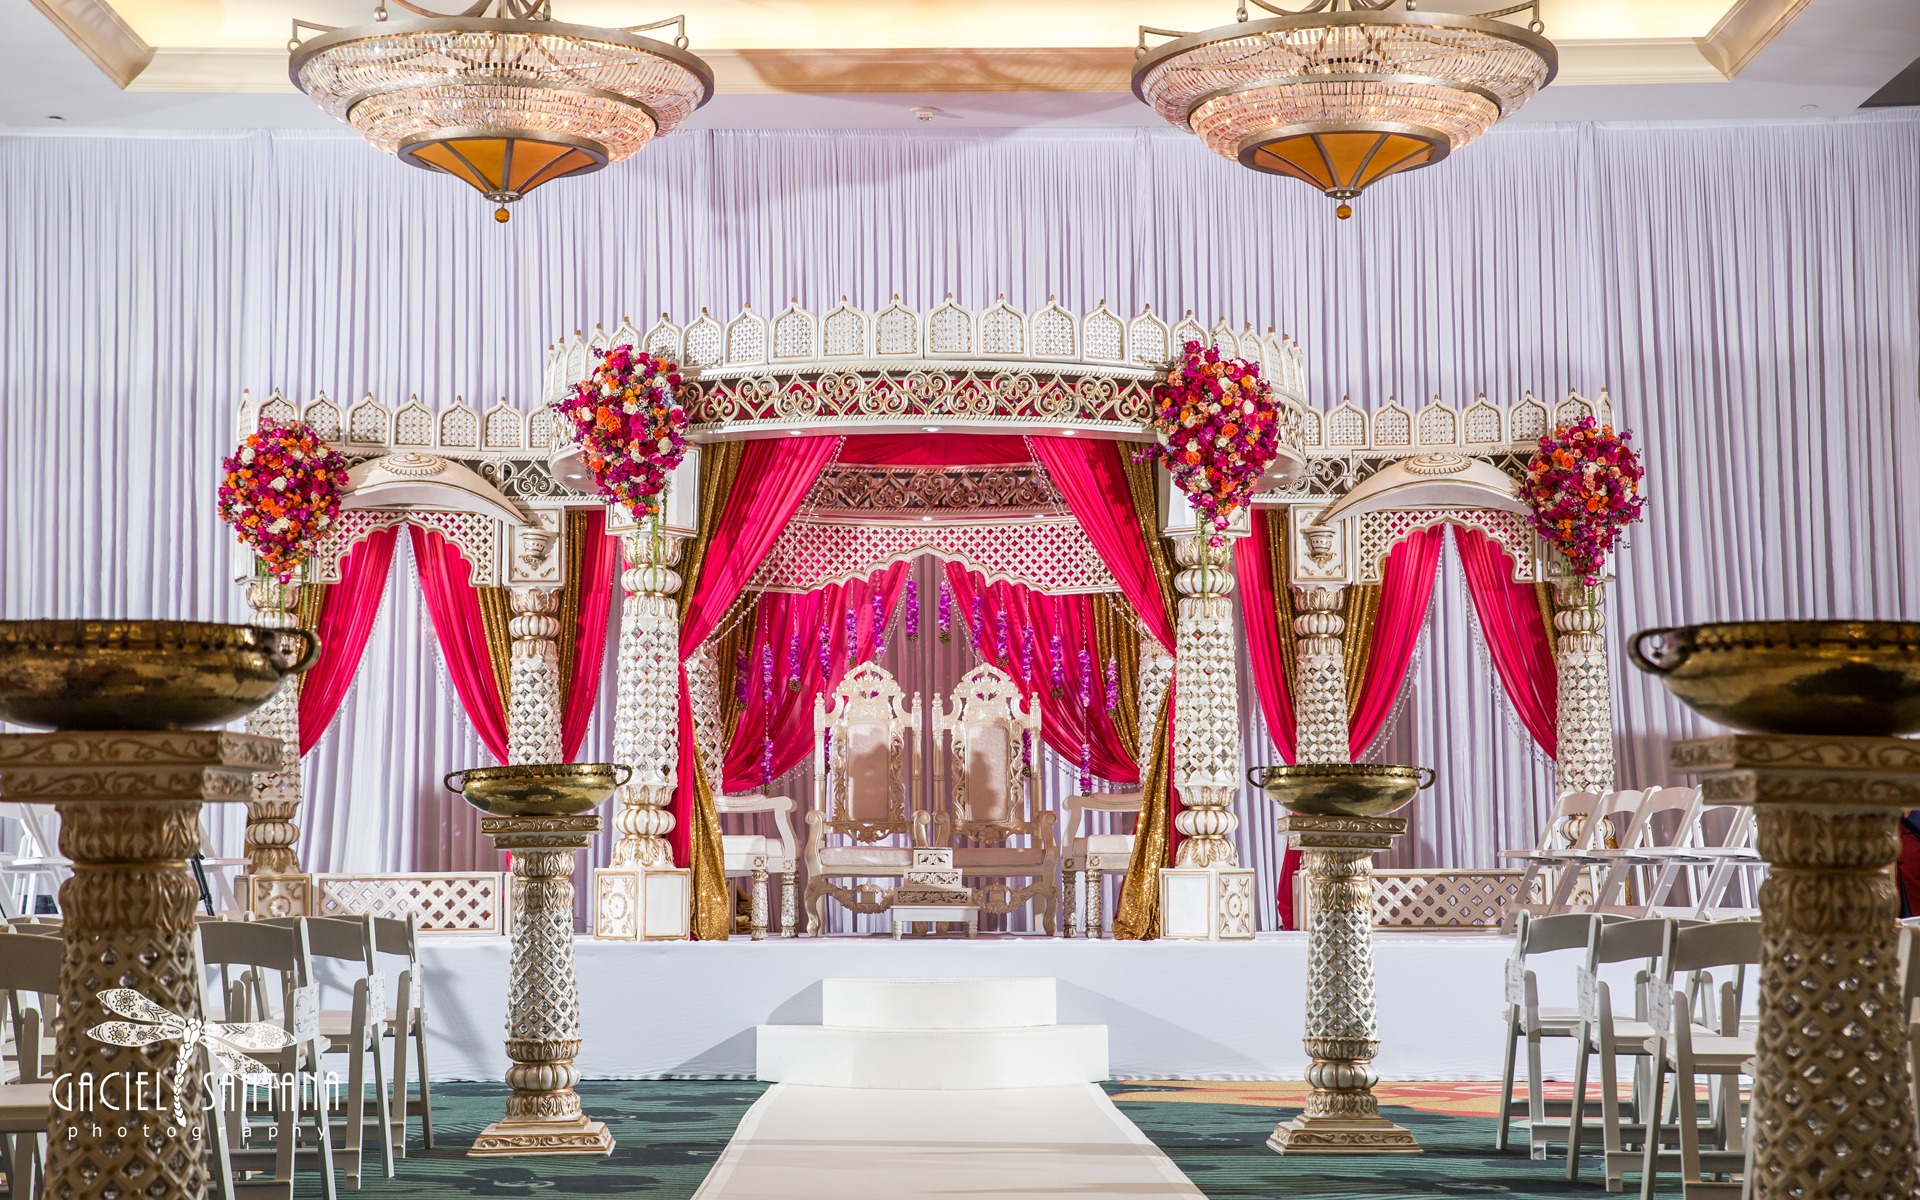 Princess Ceremony Royal Fairytale 1 South Asian Indian Wedding Decor Design Suhaag Garden Florida